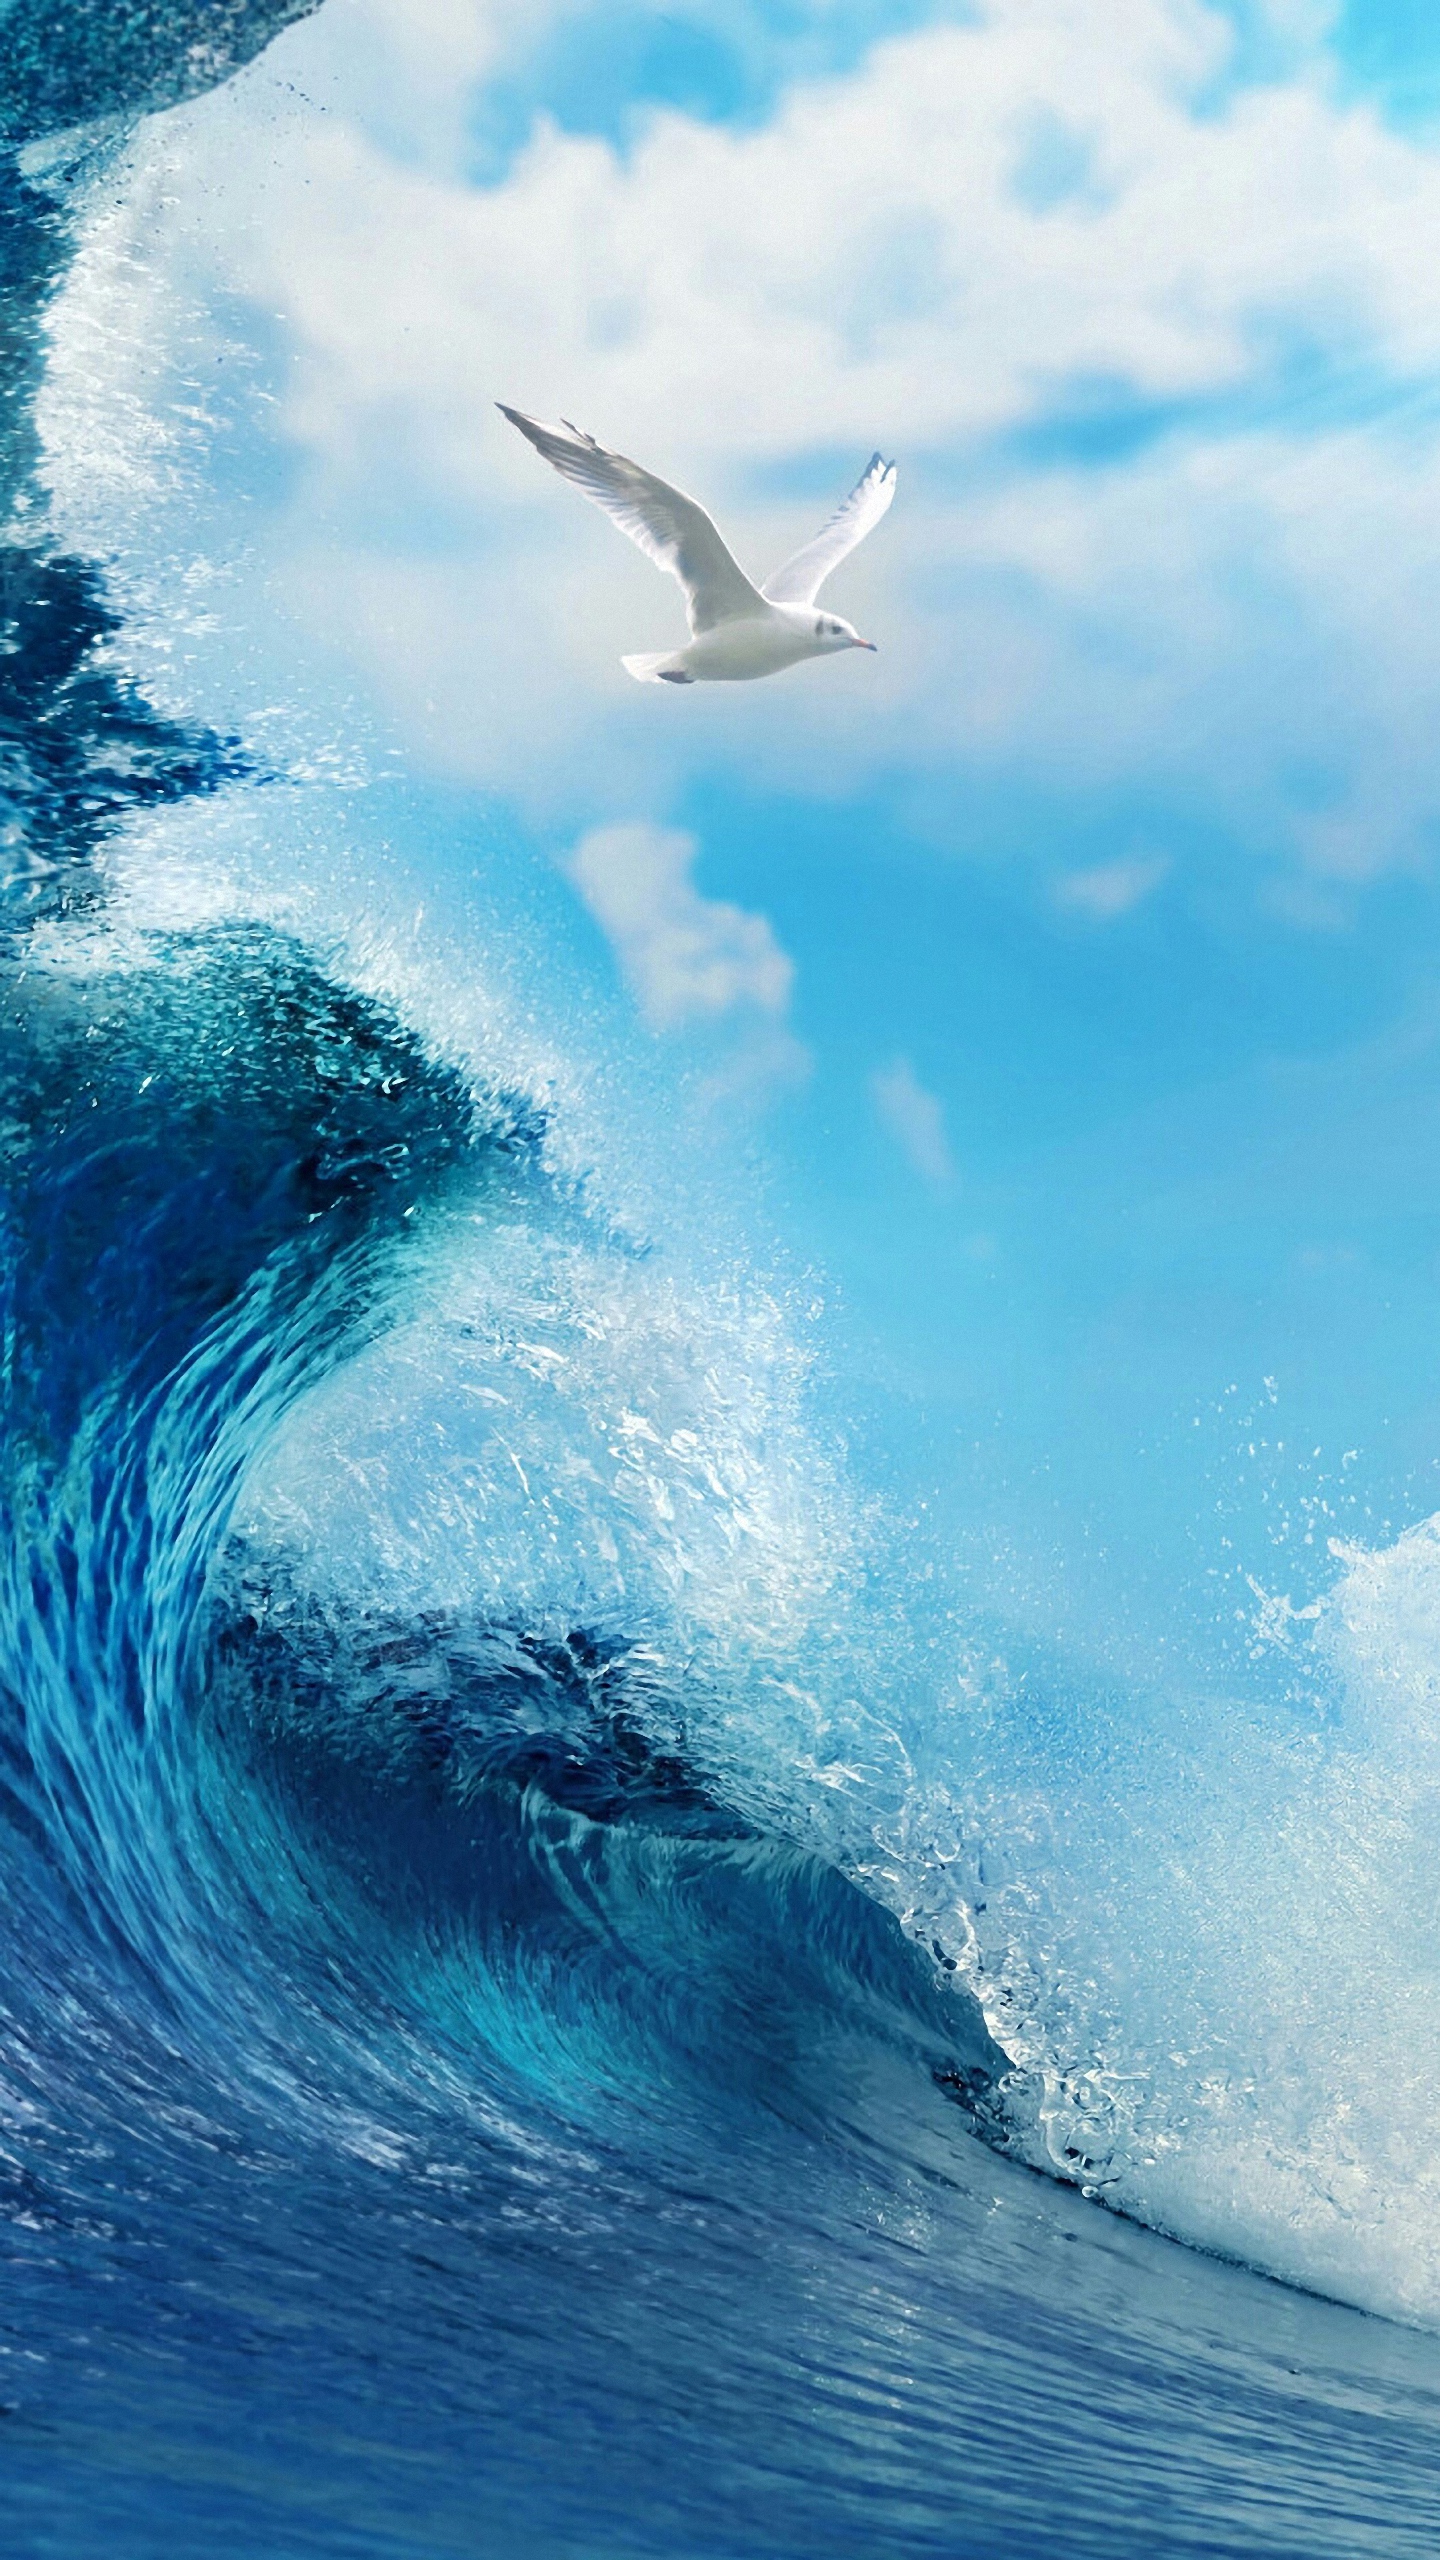 lg g4 wallpaper,wave,wind wave,water,ocean,sea